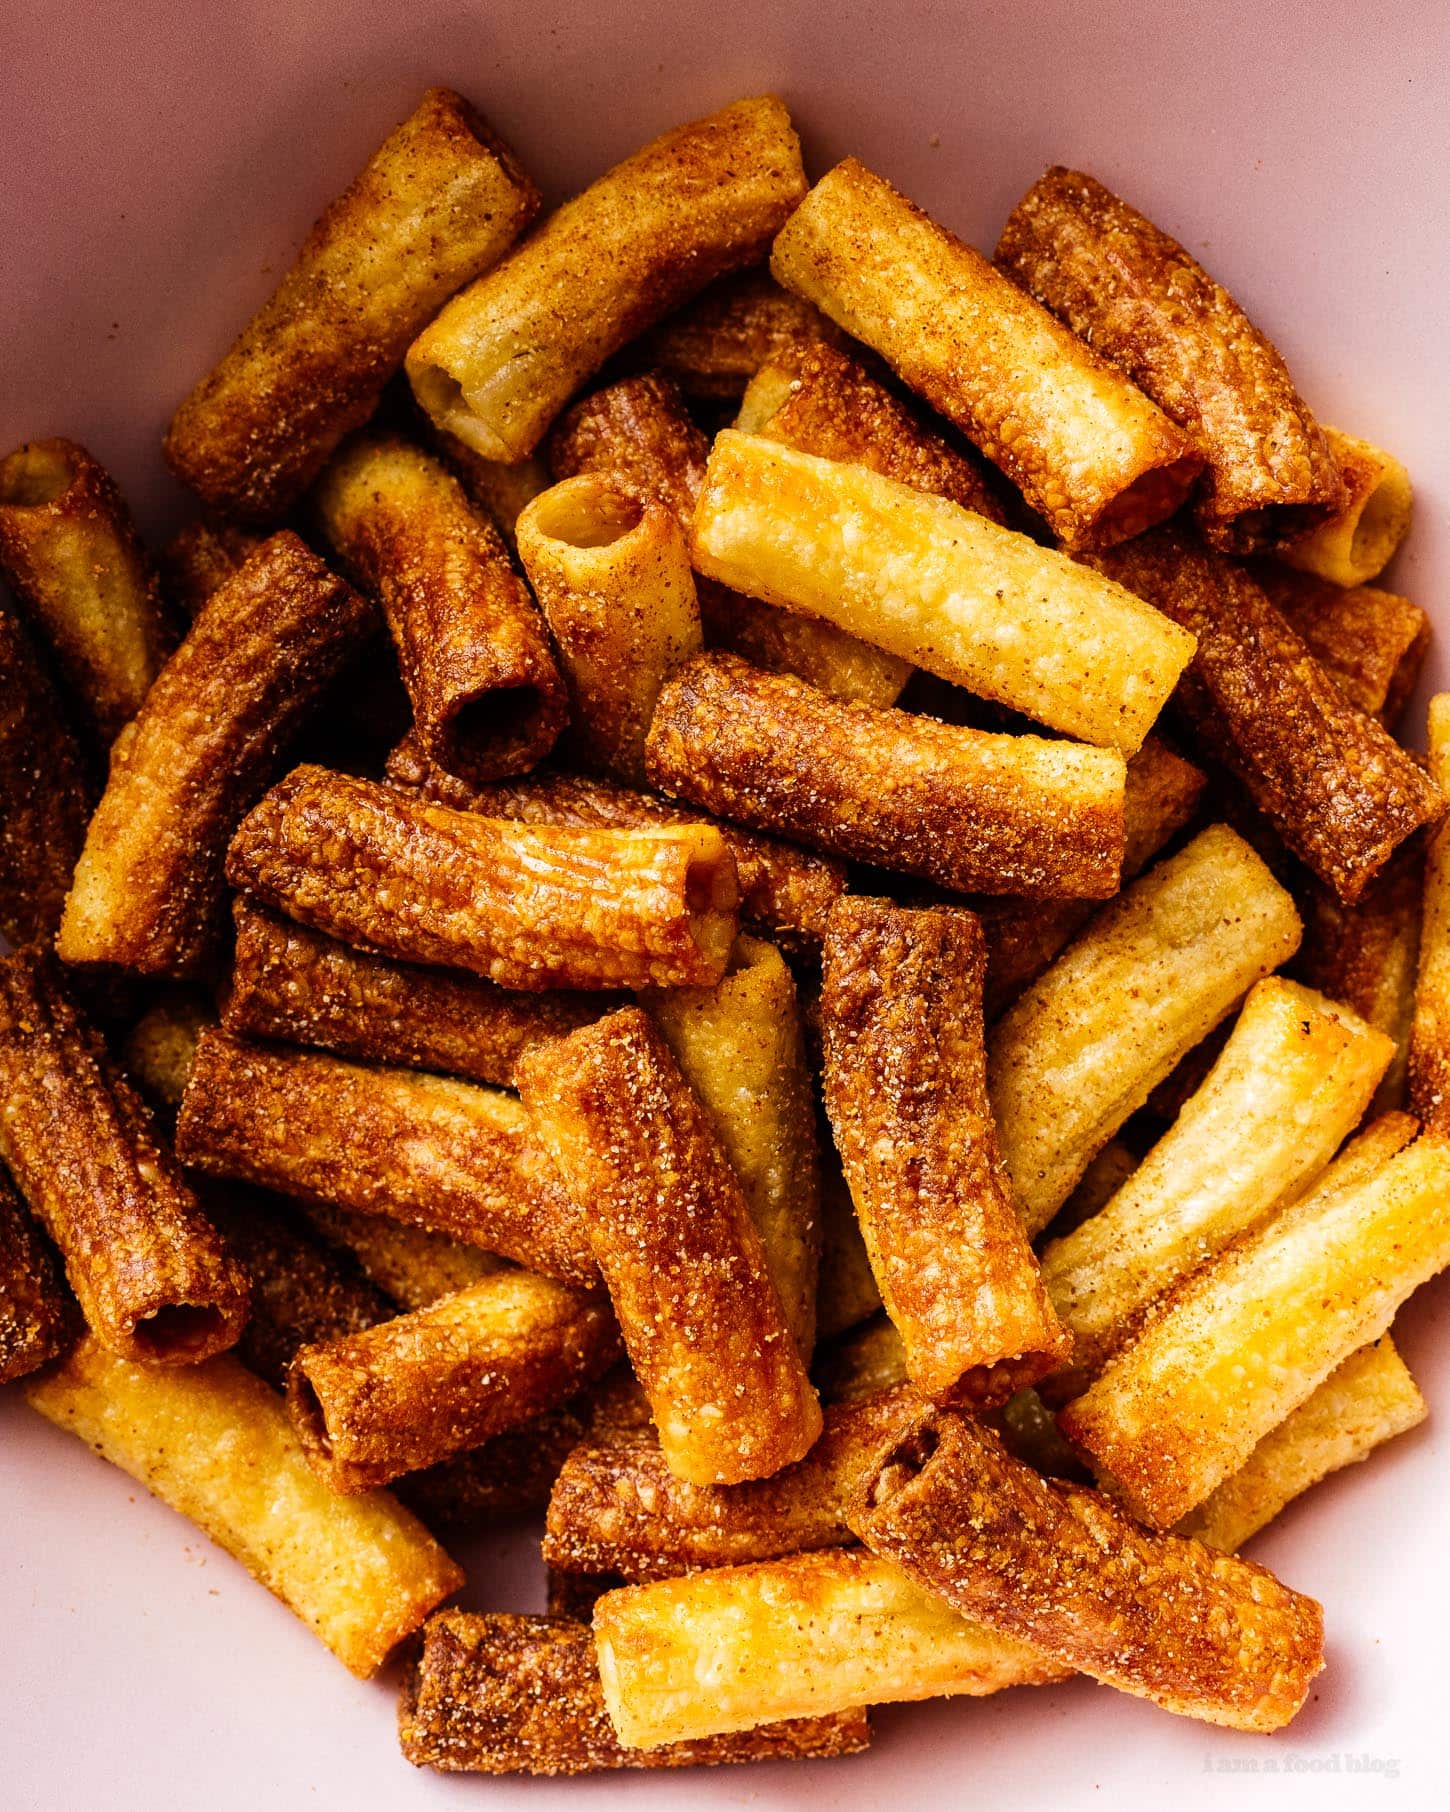 pasta chips tossed in spicy powder | sharefavoritefood.com